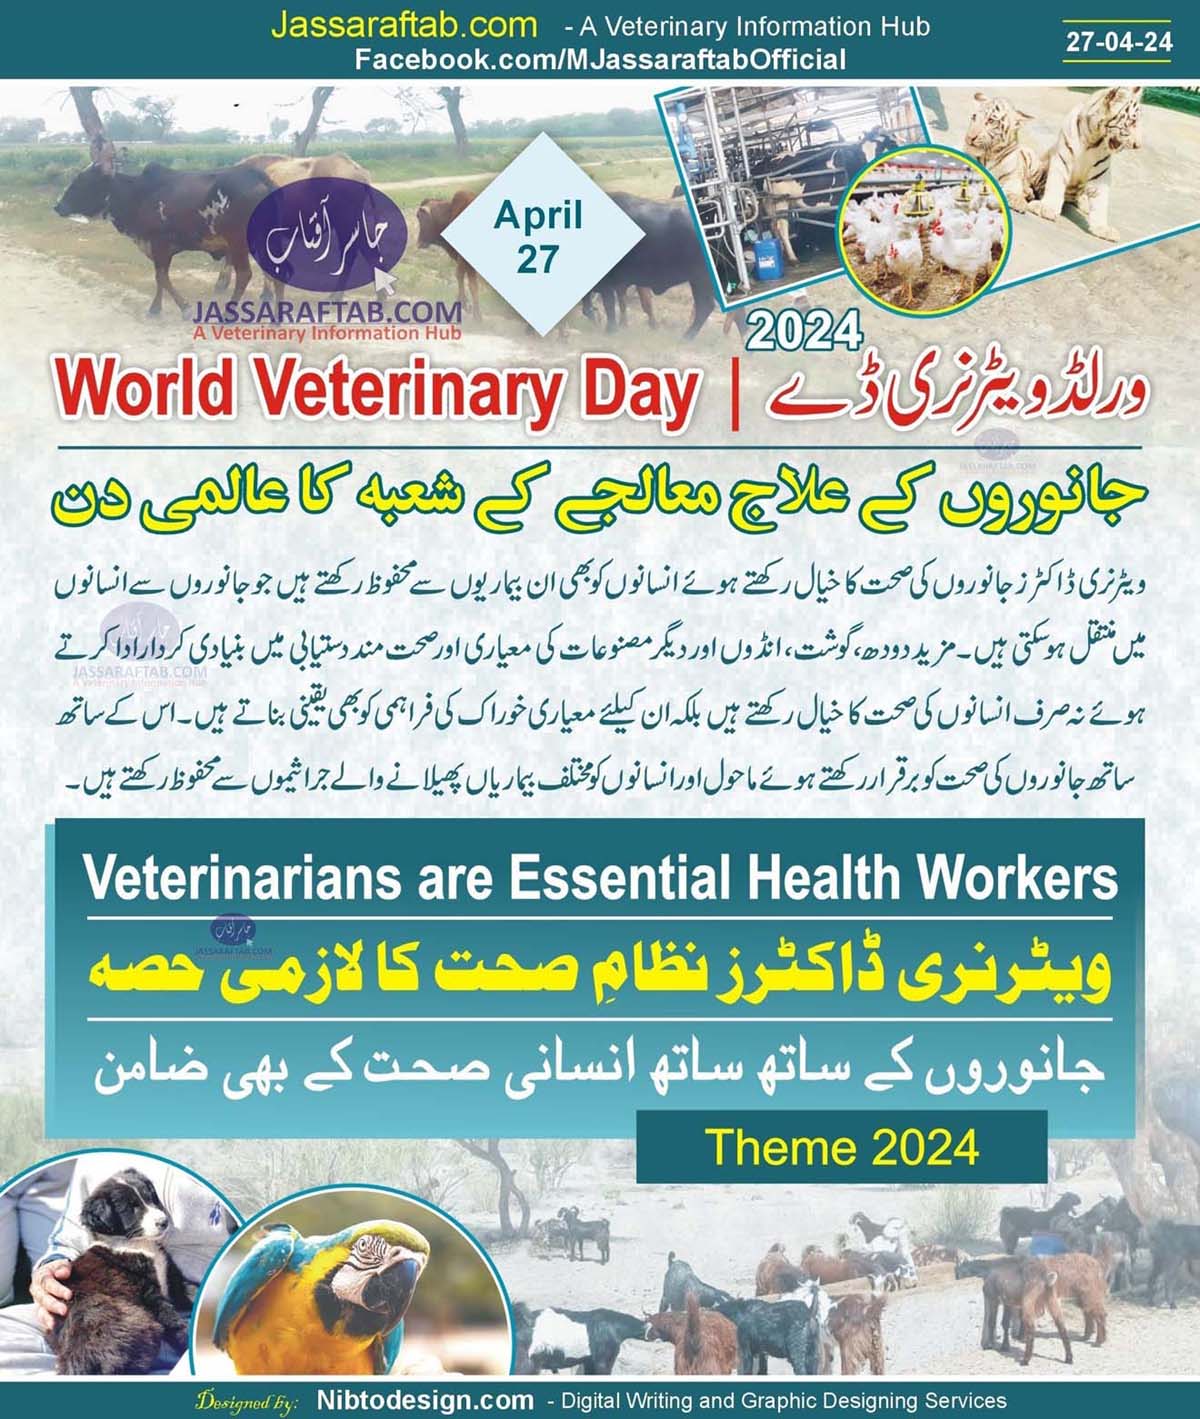 Happy World Veterinary Day 2024 - World Veterinary Day Theme in Urdu